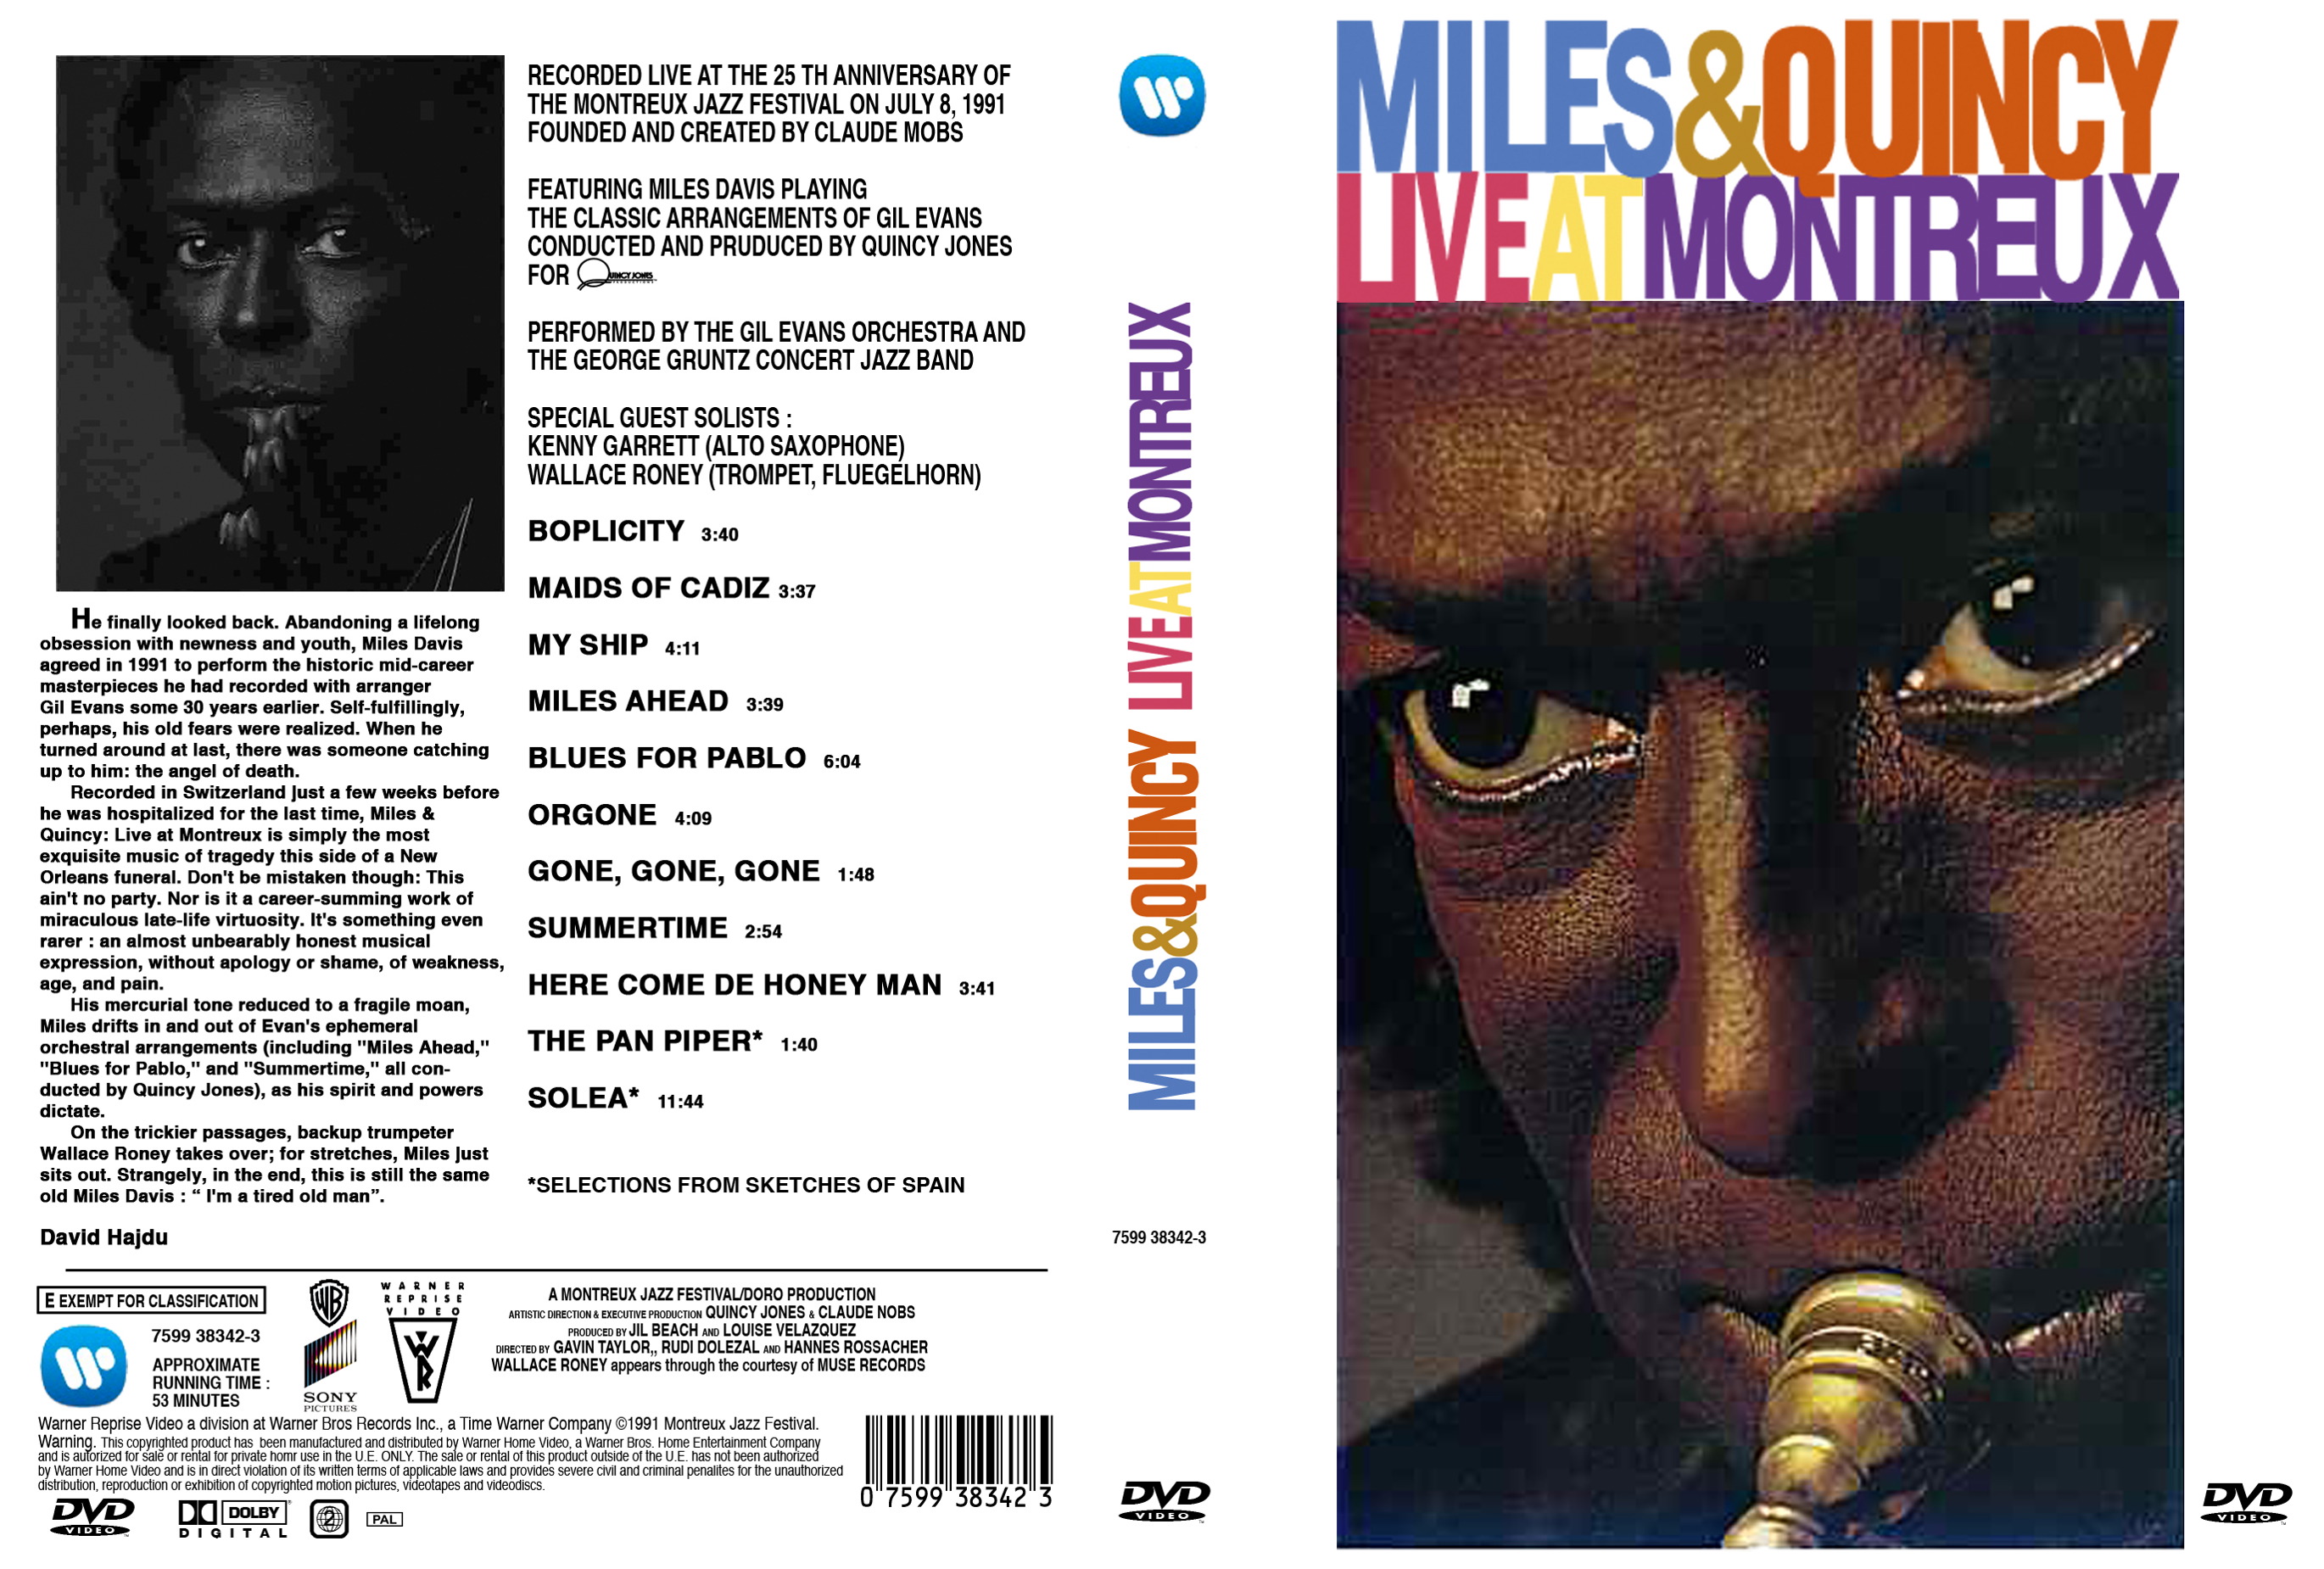 Jaquette DVD Miles & Quincy live at Montreux custom